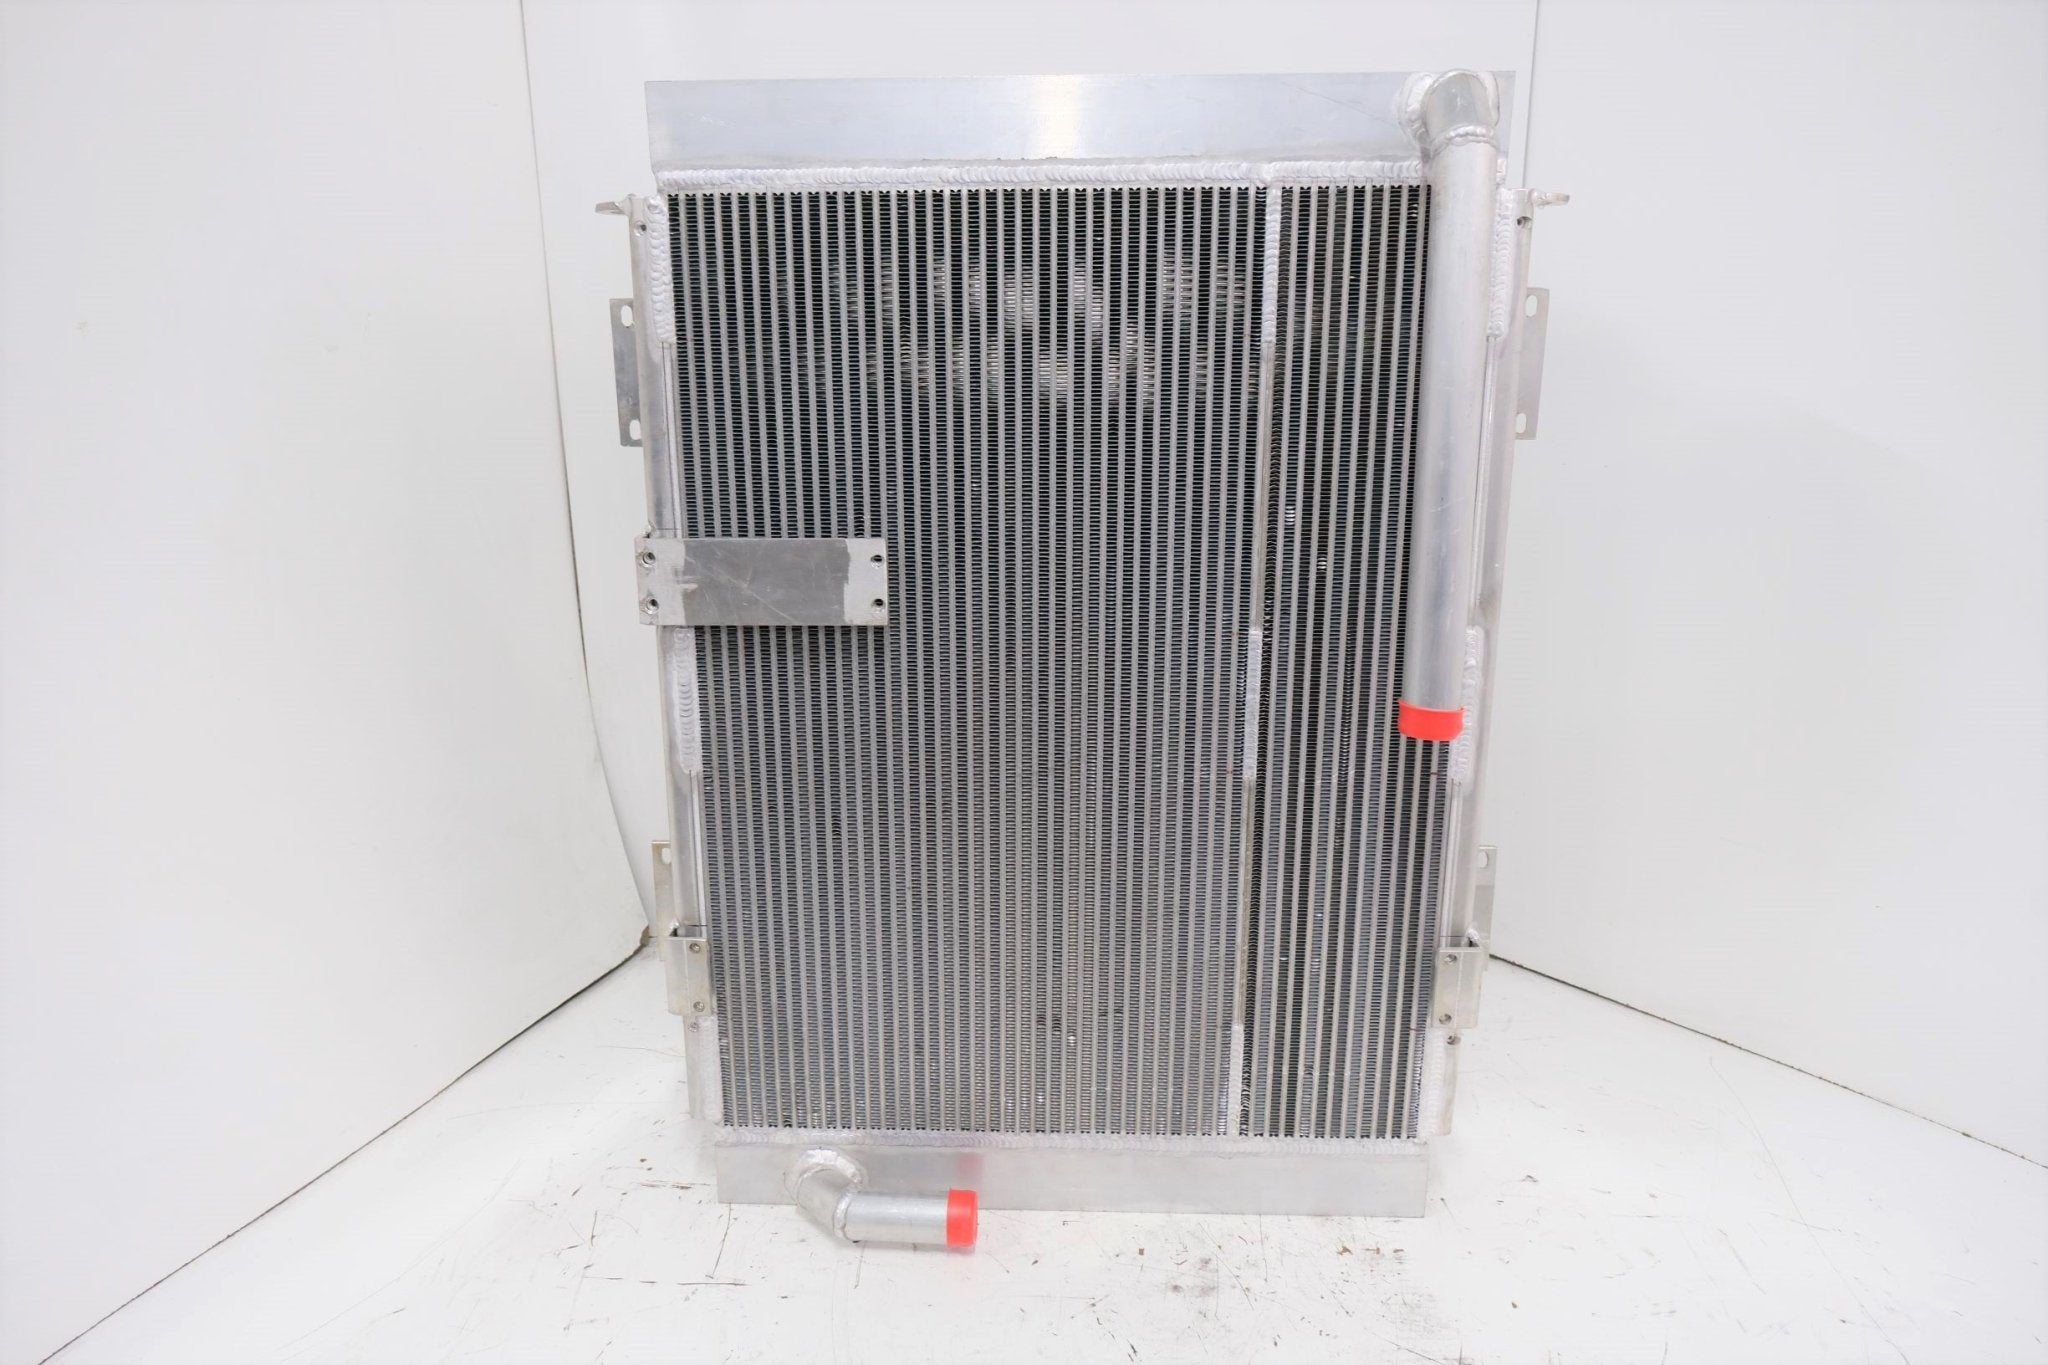 Samsung SE280 Oil Cooler # 890182 - Radiator Supply House